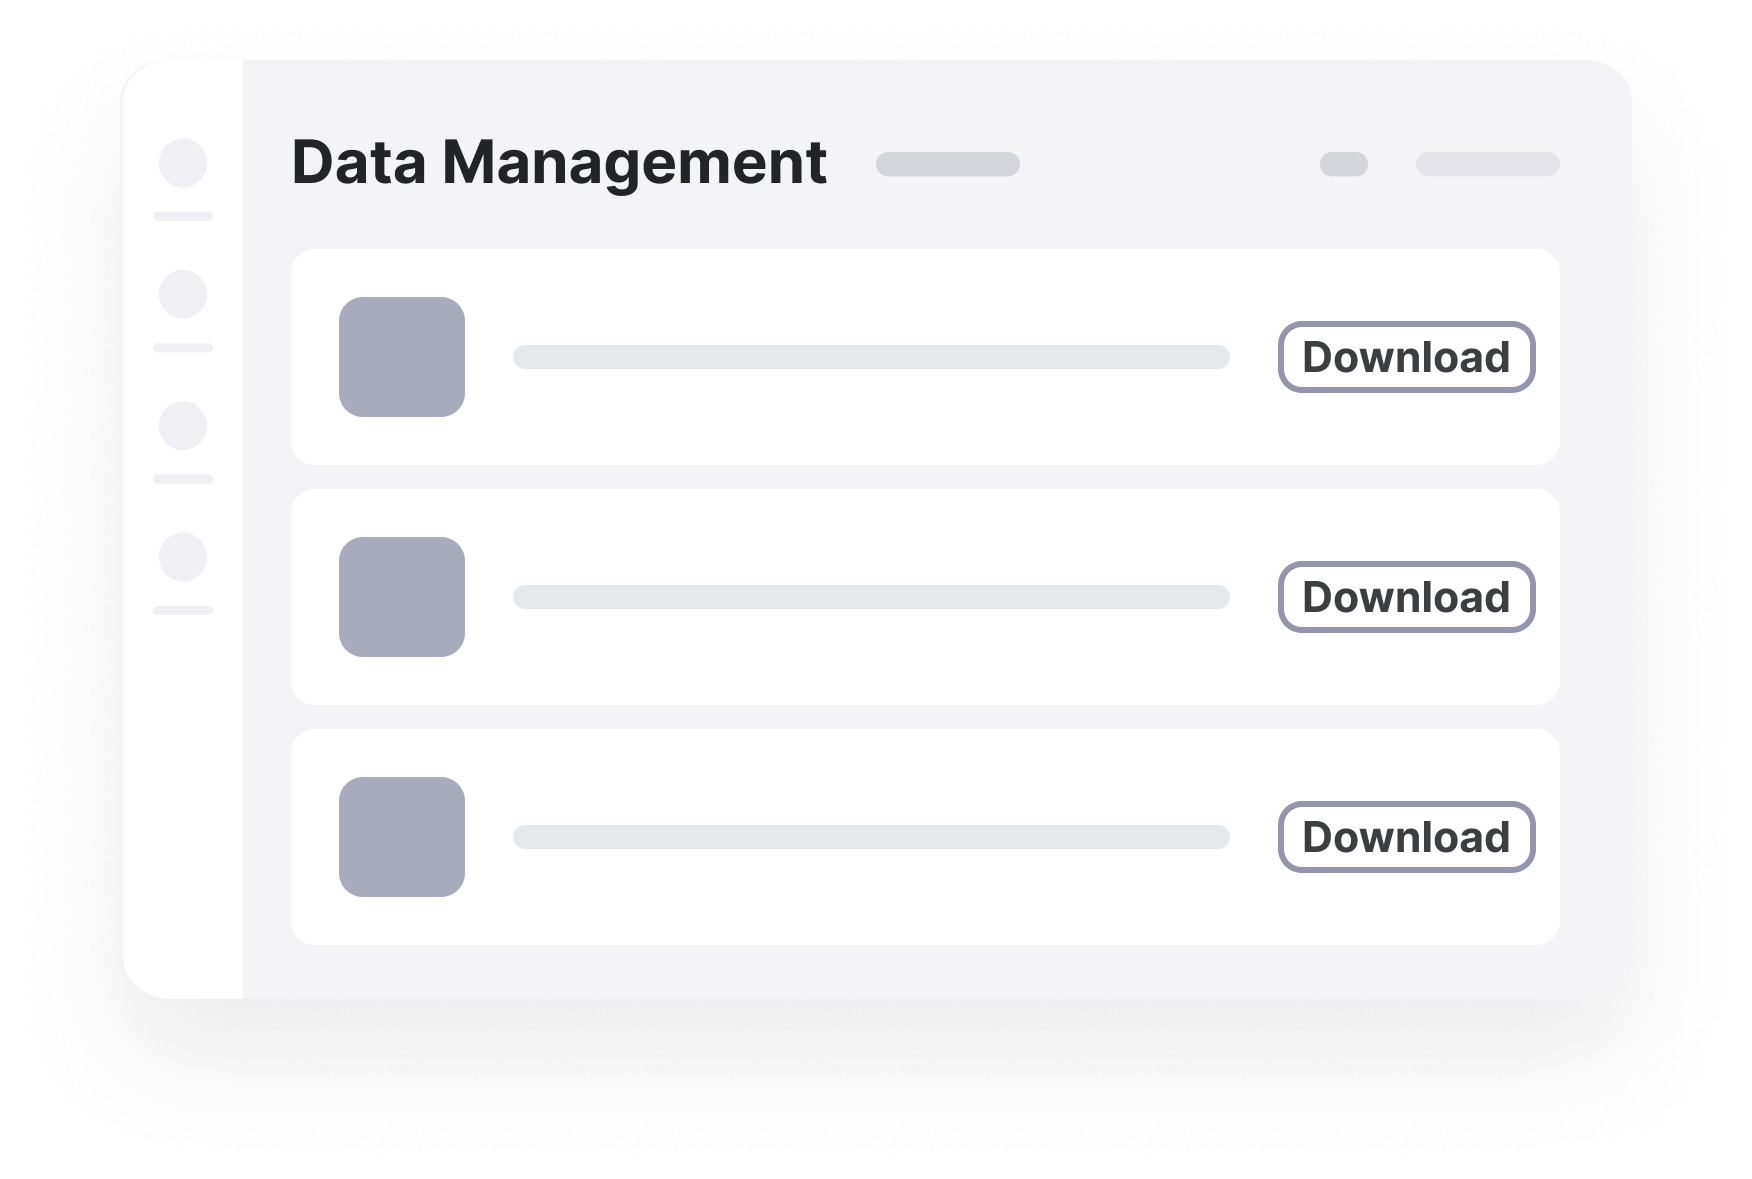 Data Management- Option 1